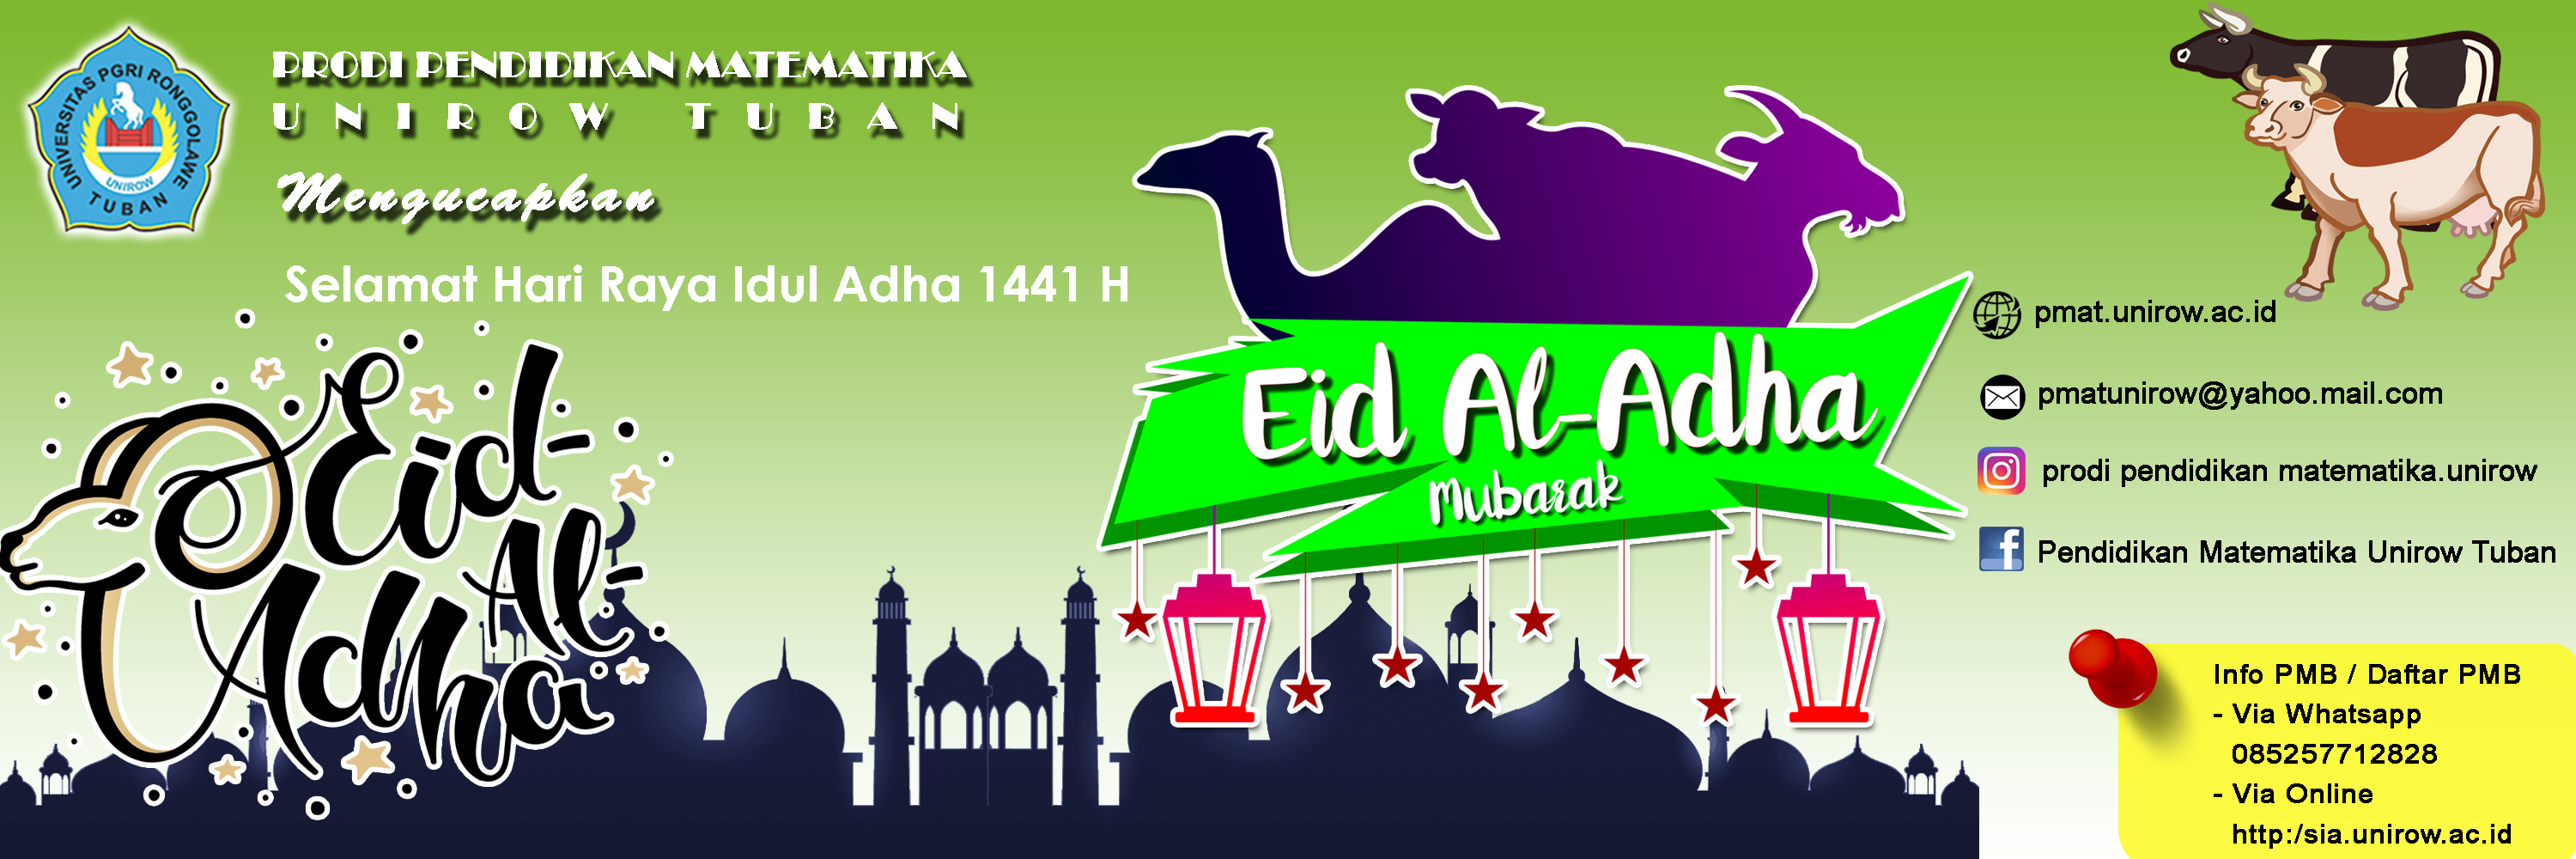 	Selamat Hari Raya Idul Adha 1441 H